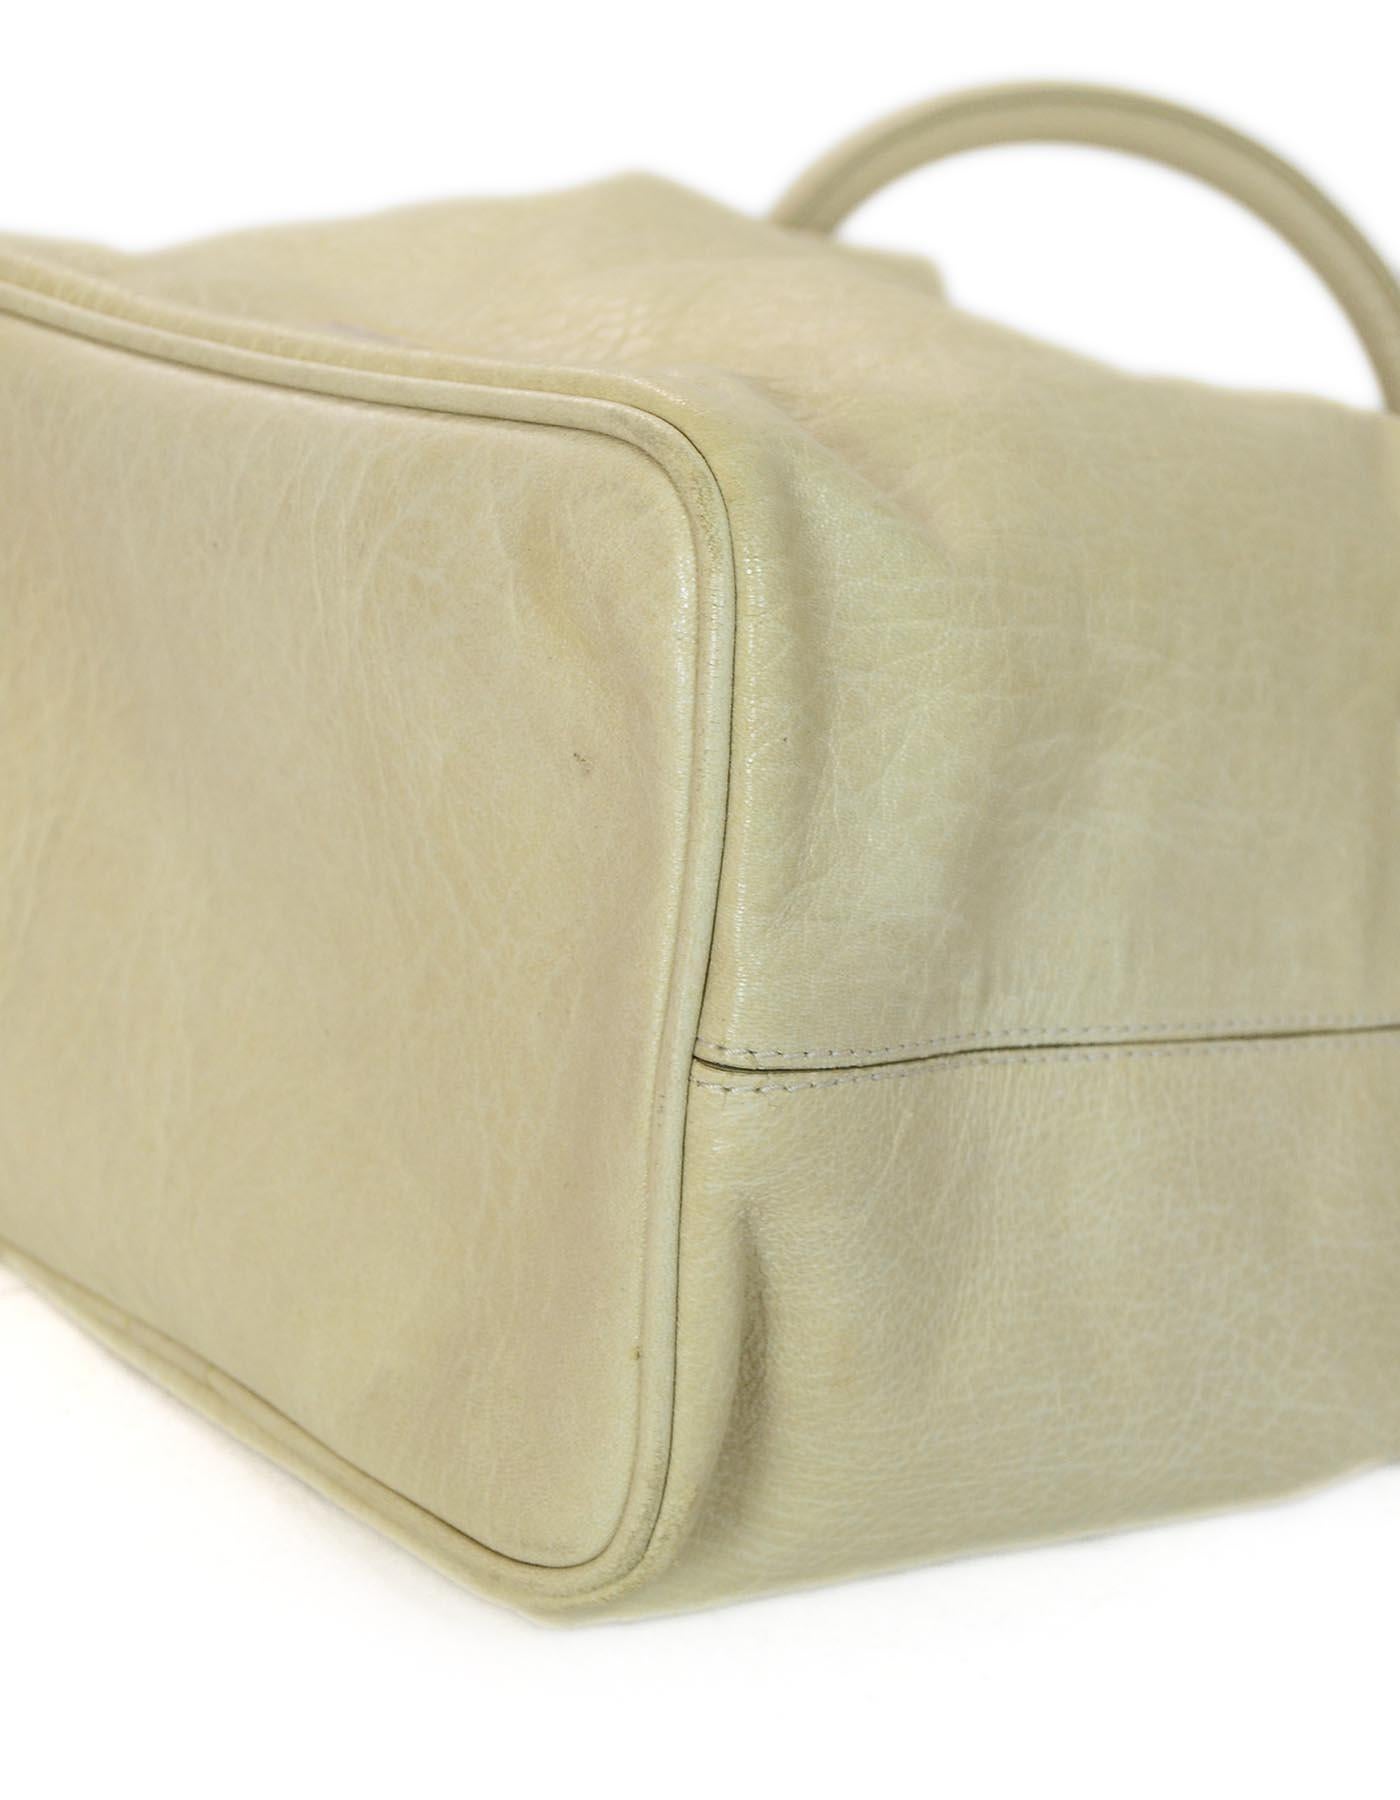 Marc Jacobs Beige Leather Top Handle Bag W/ Stones 1